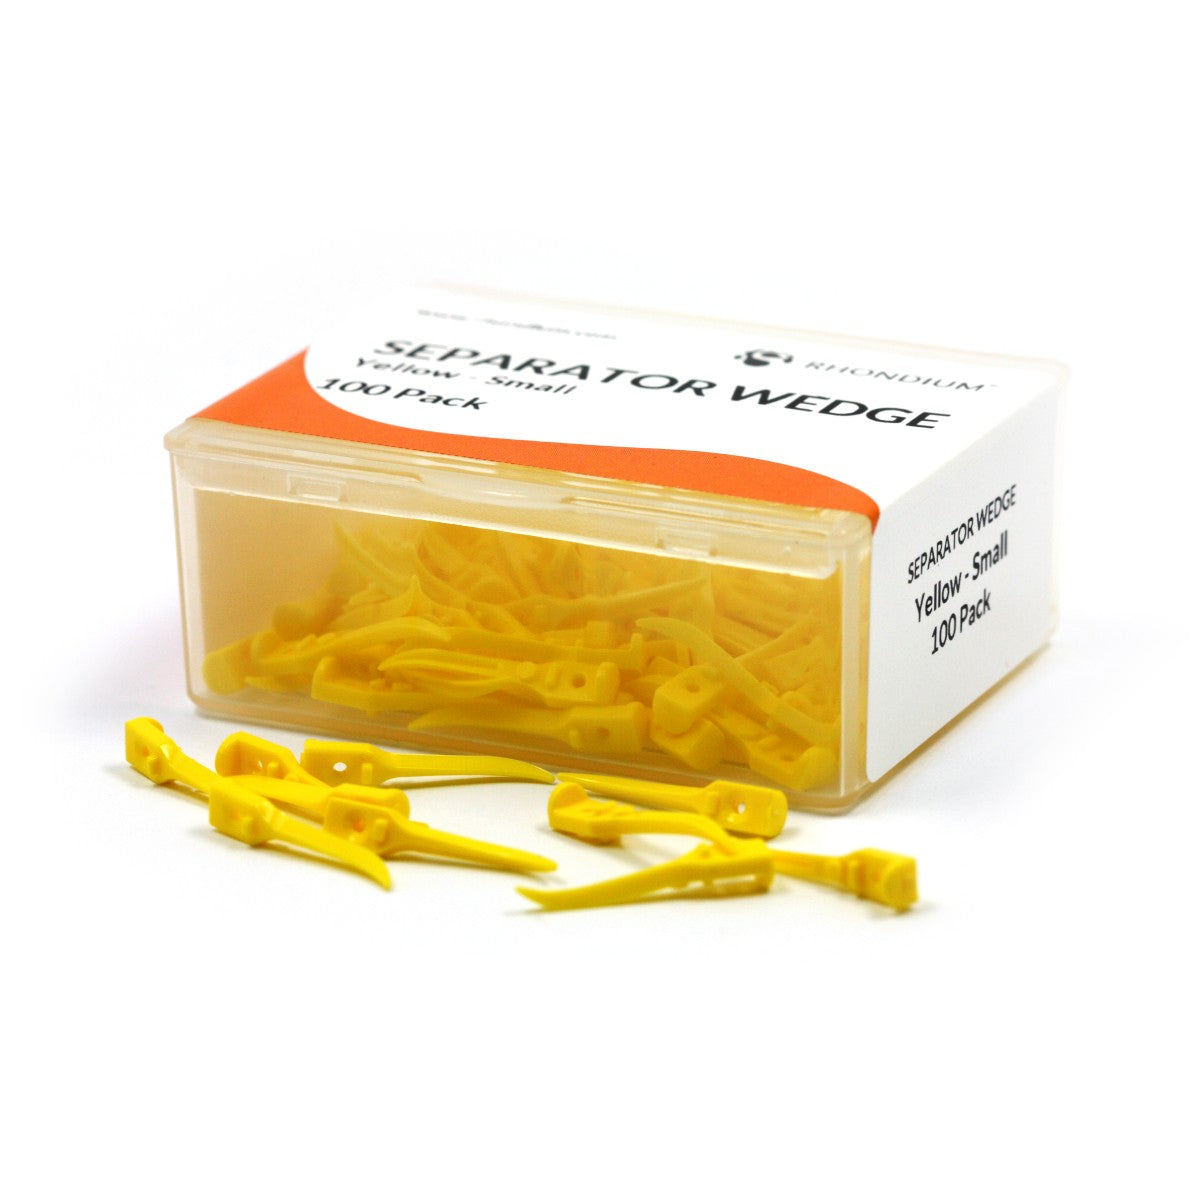 Separator Wedge - Small - Yellow - 100 Pack